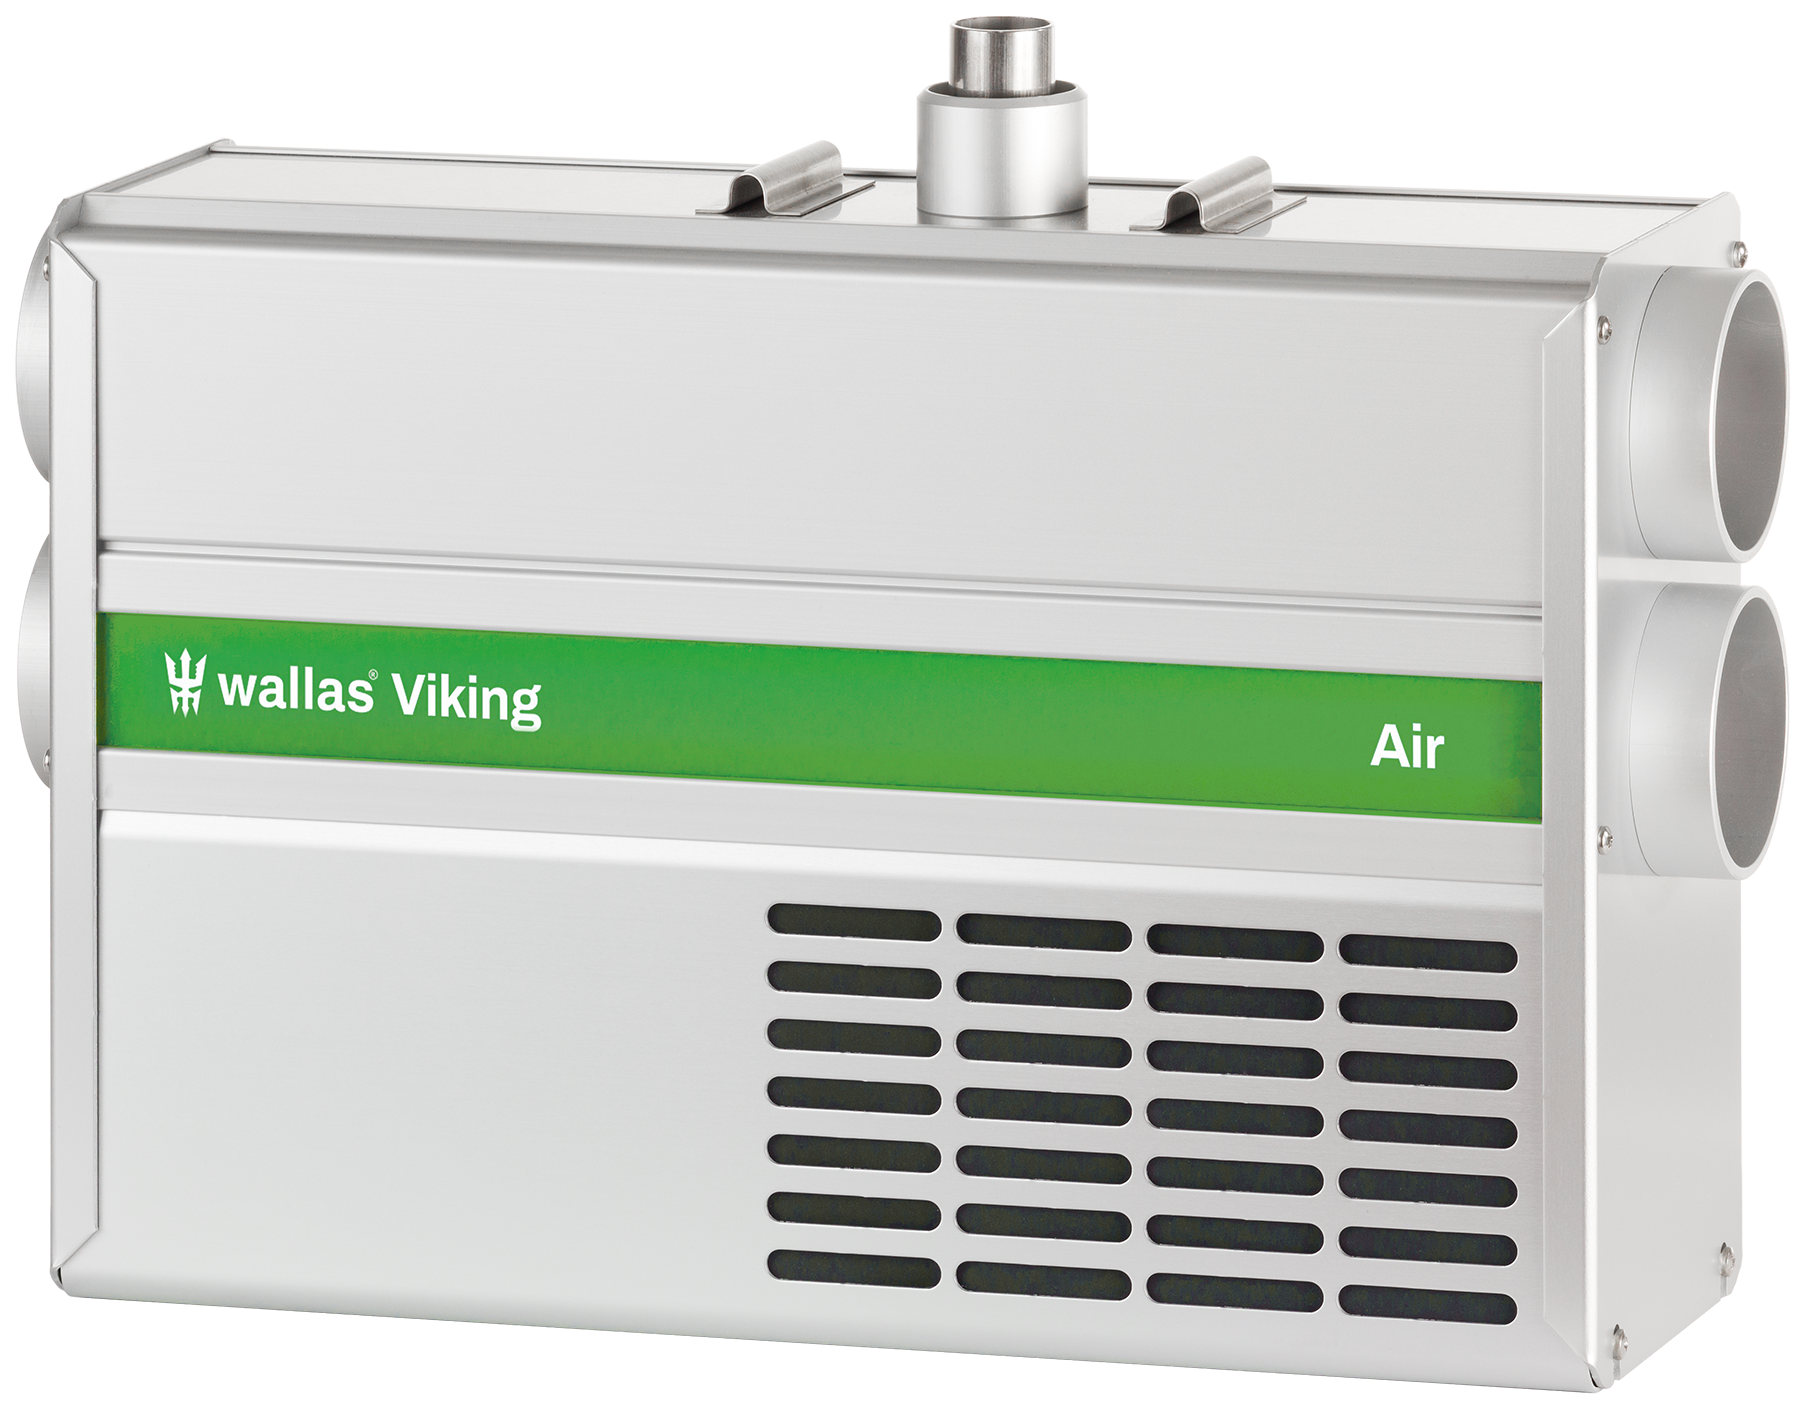 Wallas Viking Digital Diesel Heater - sold by Scan Marine USA